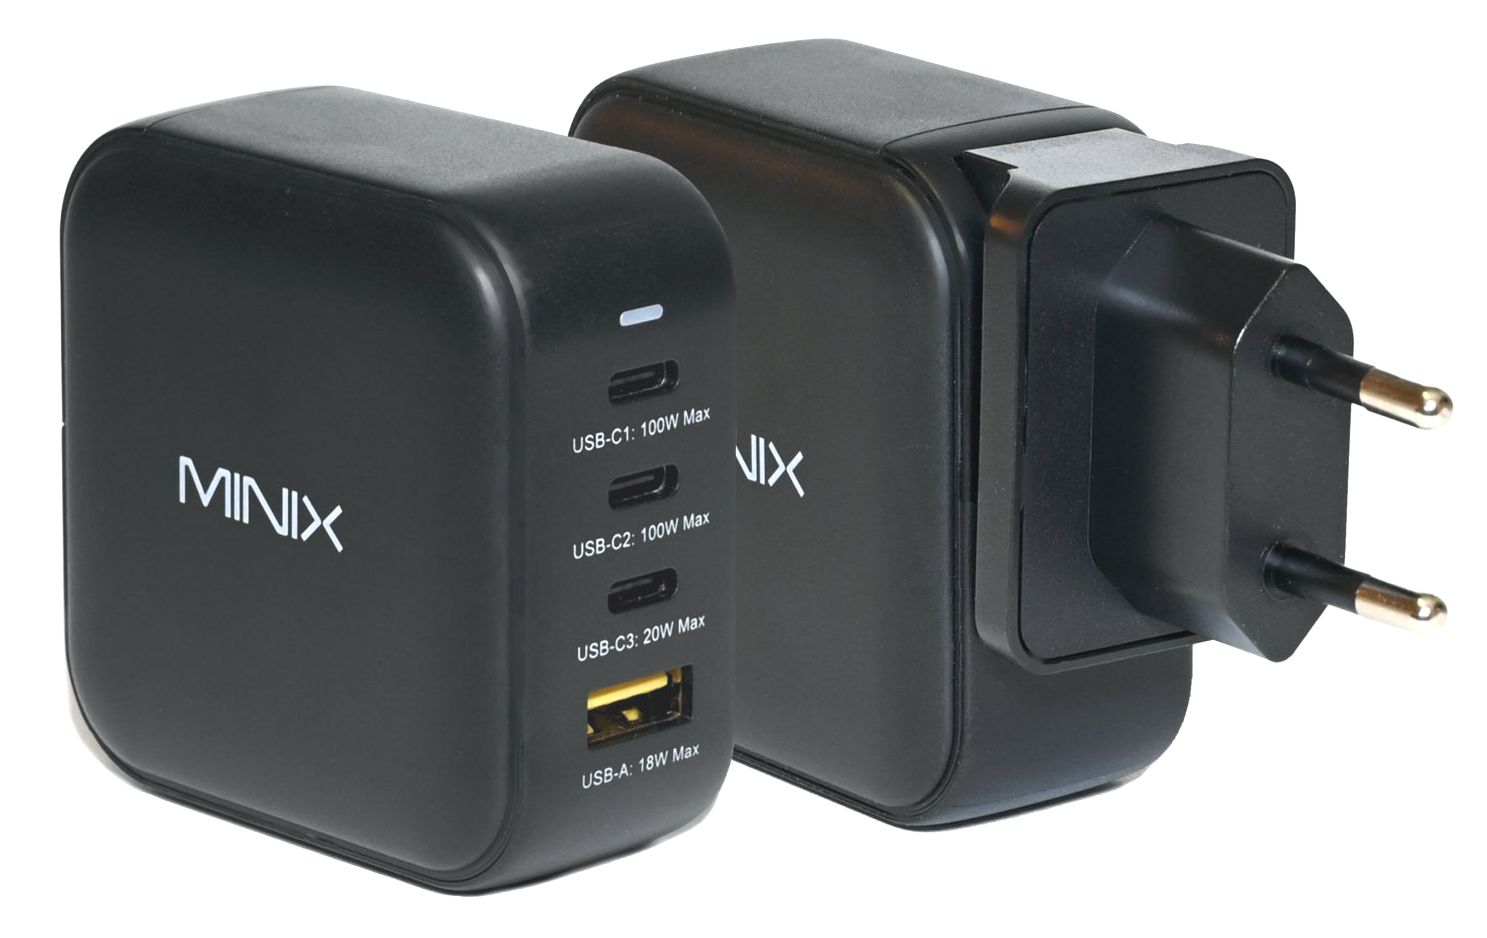  MINIX 66W Turbo 3-Port GaN Wall Charger 2 x USB-C Fast Charging  Adapter, 1 x USB-A Quick Charge 3.0, Compatible with MacBook Pro Air, iPad  Pro, iPhone 12/12 mini/11, Galaxy S9